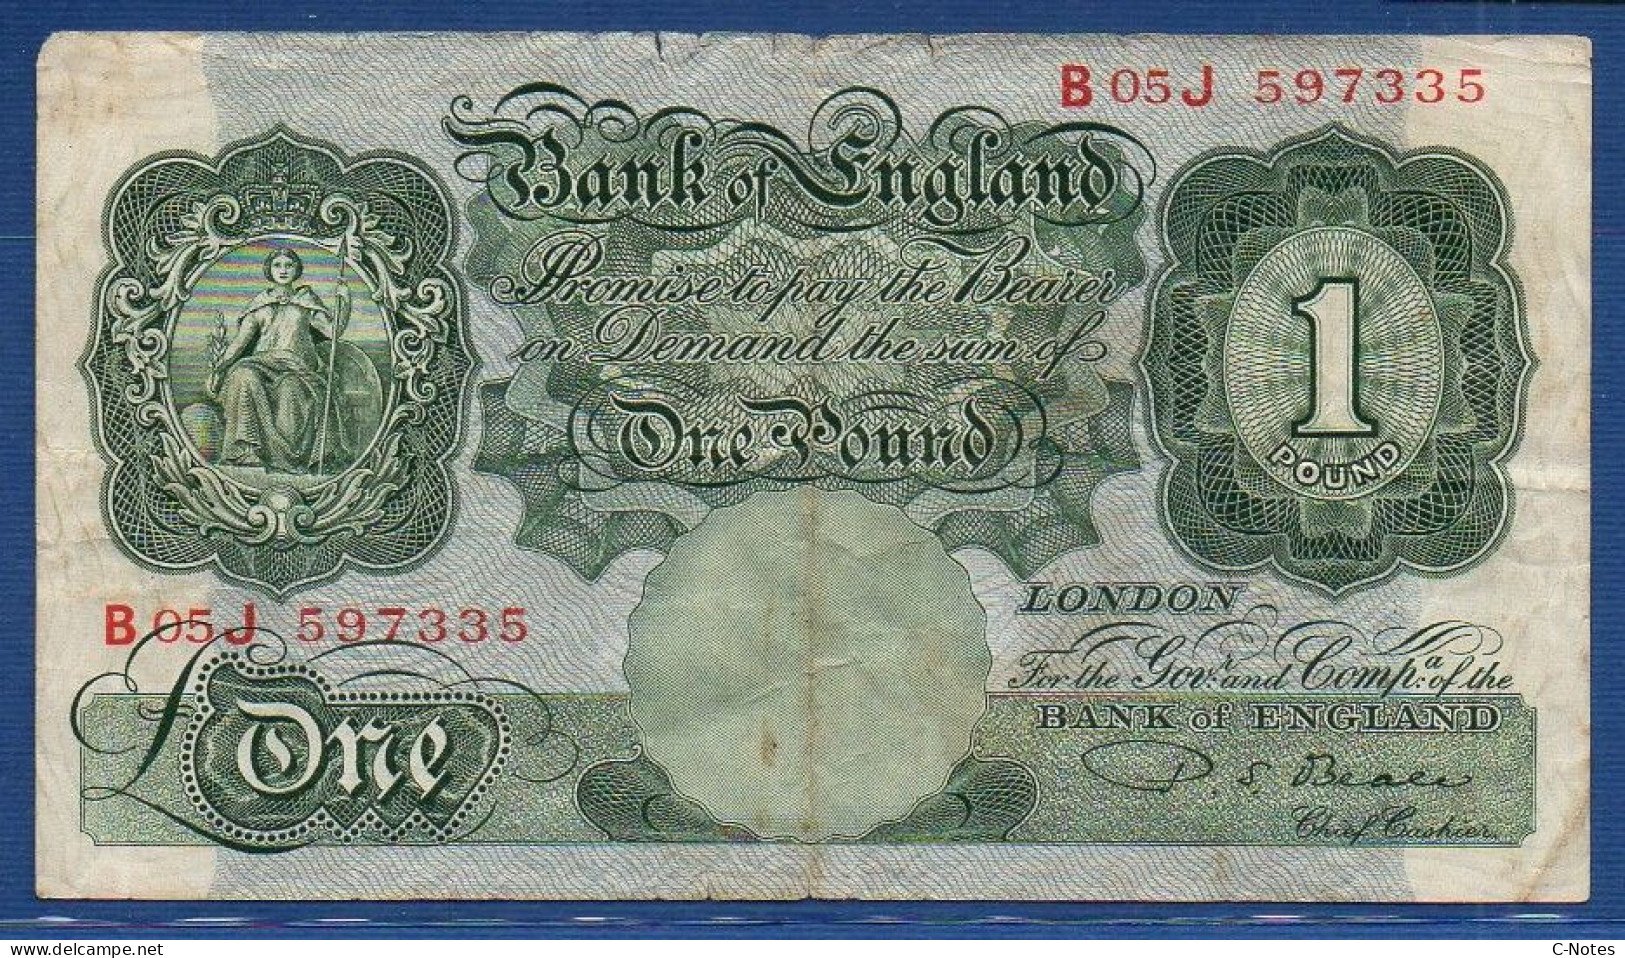 GREAT BRITAIN - P.369b – 1 Pound ND (1948 - 1960) Circulated,  S/n B05J 597335 - 1 Pound